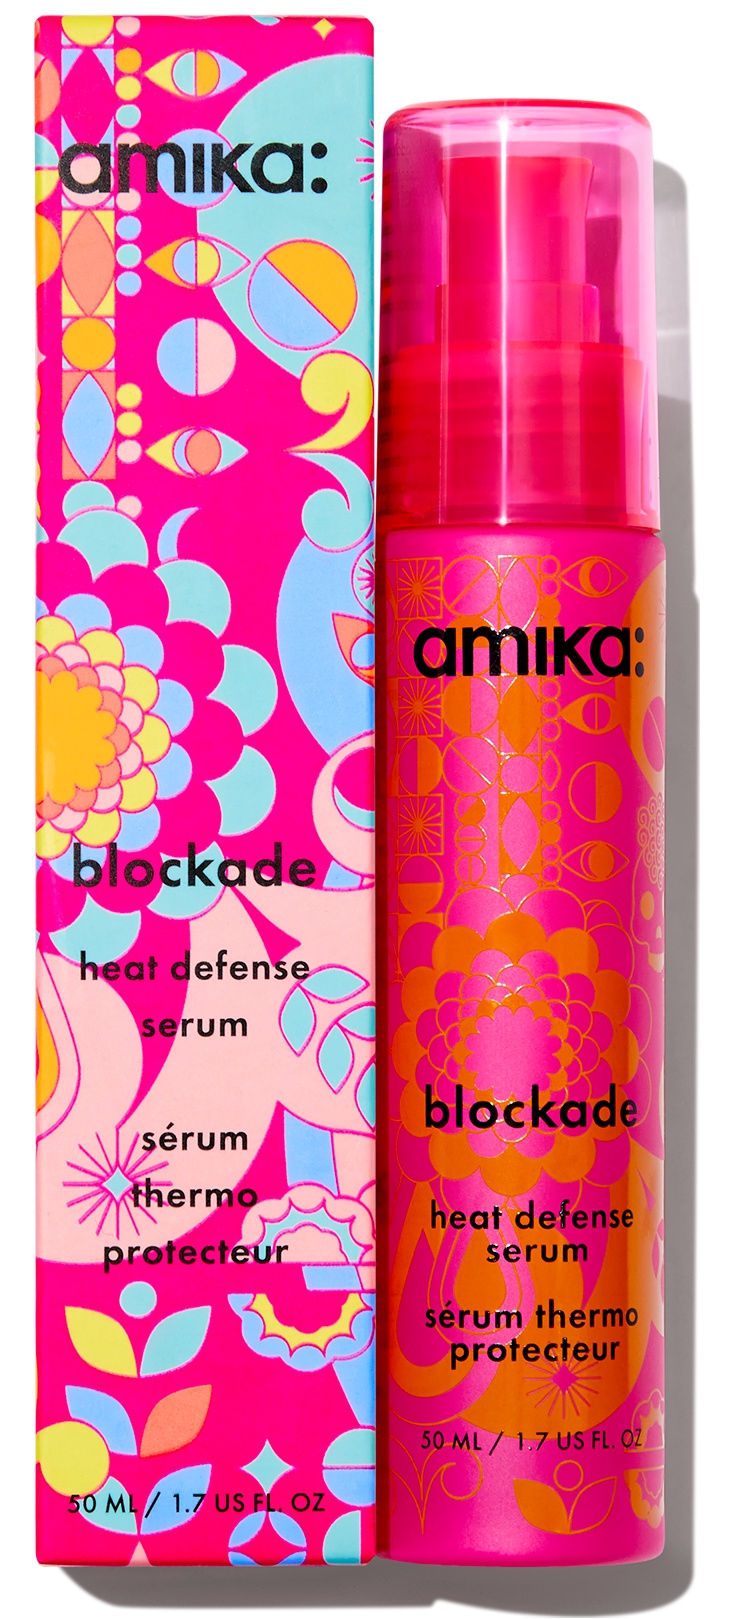 Amika Blockade Heat Defense Serum